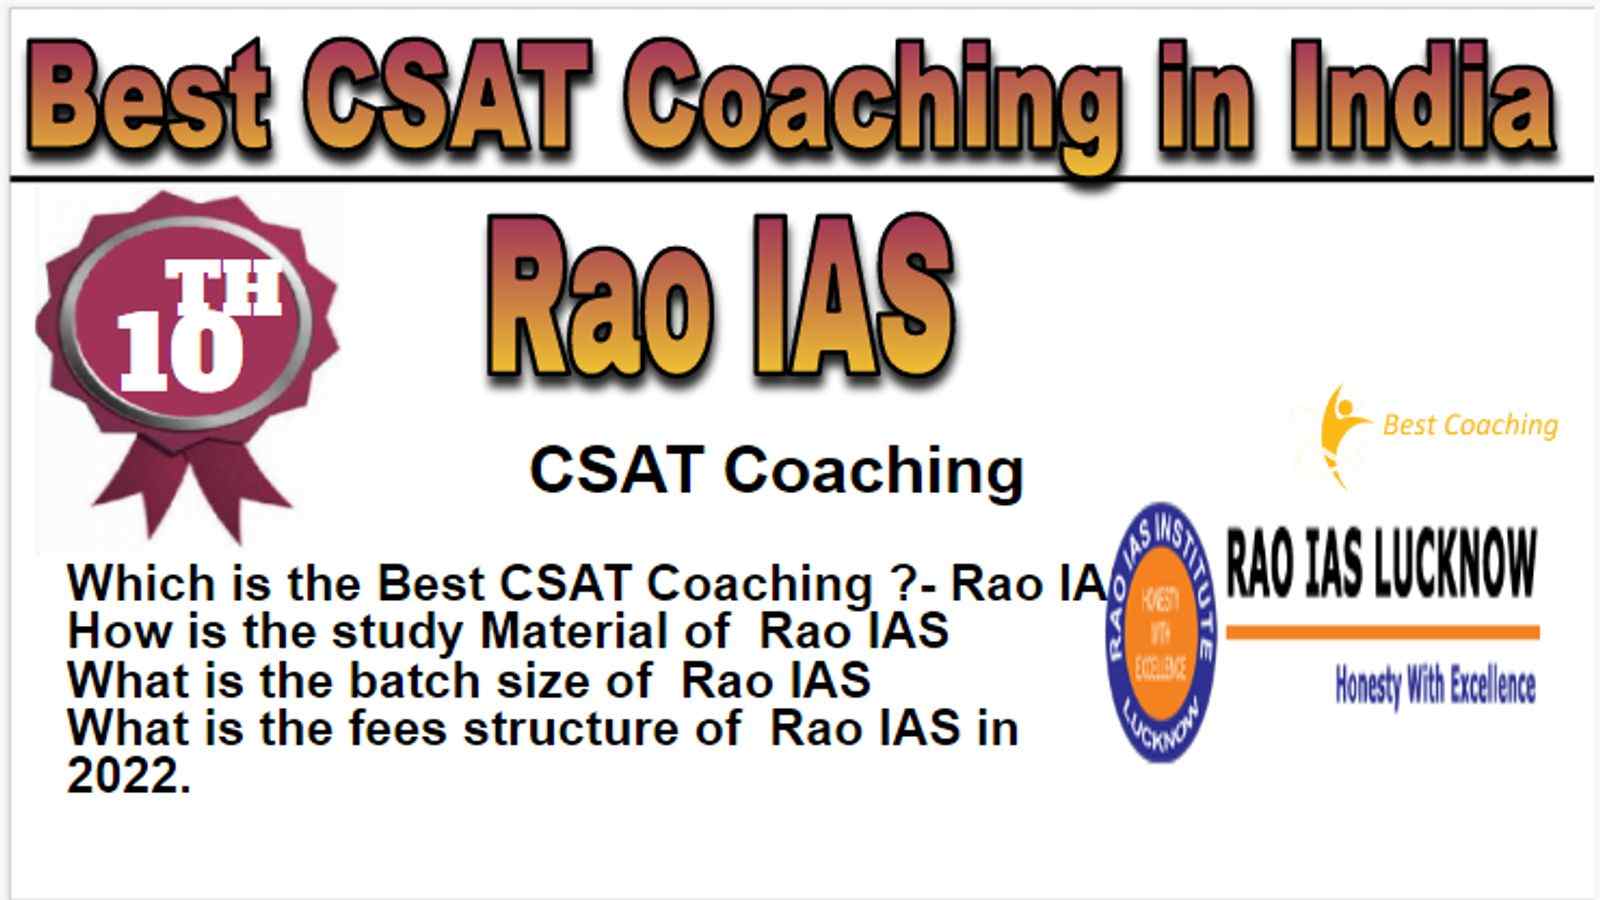 Rank 10 Best CSAT Coaching in India